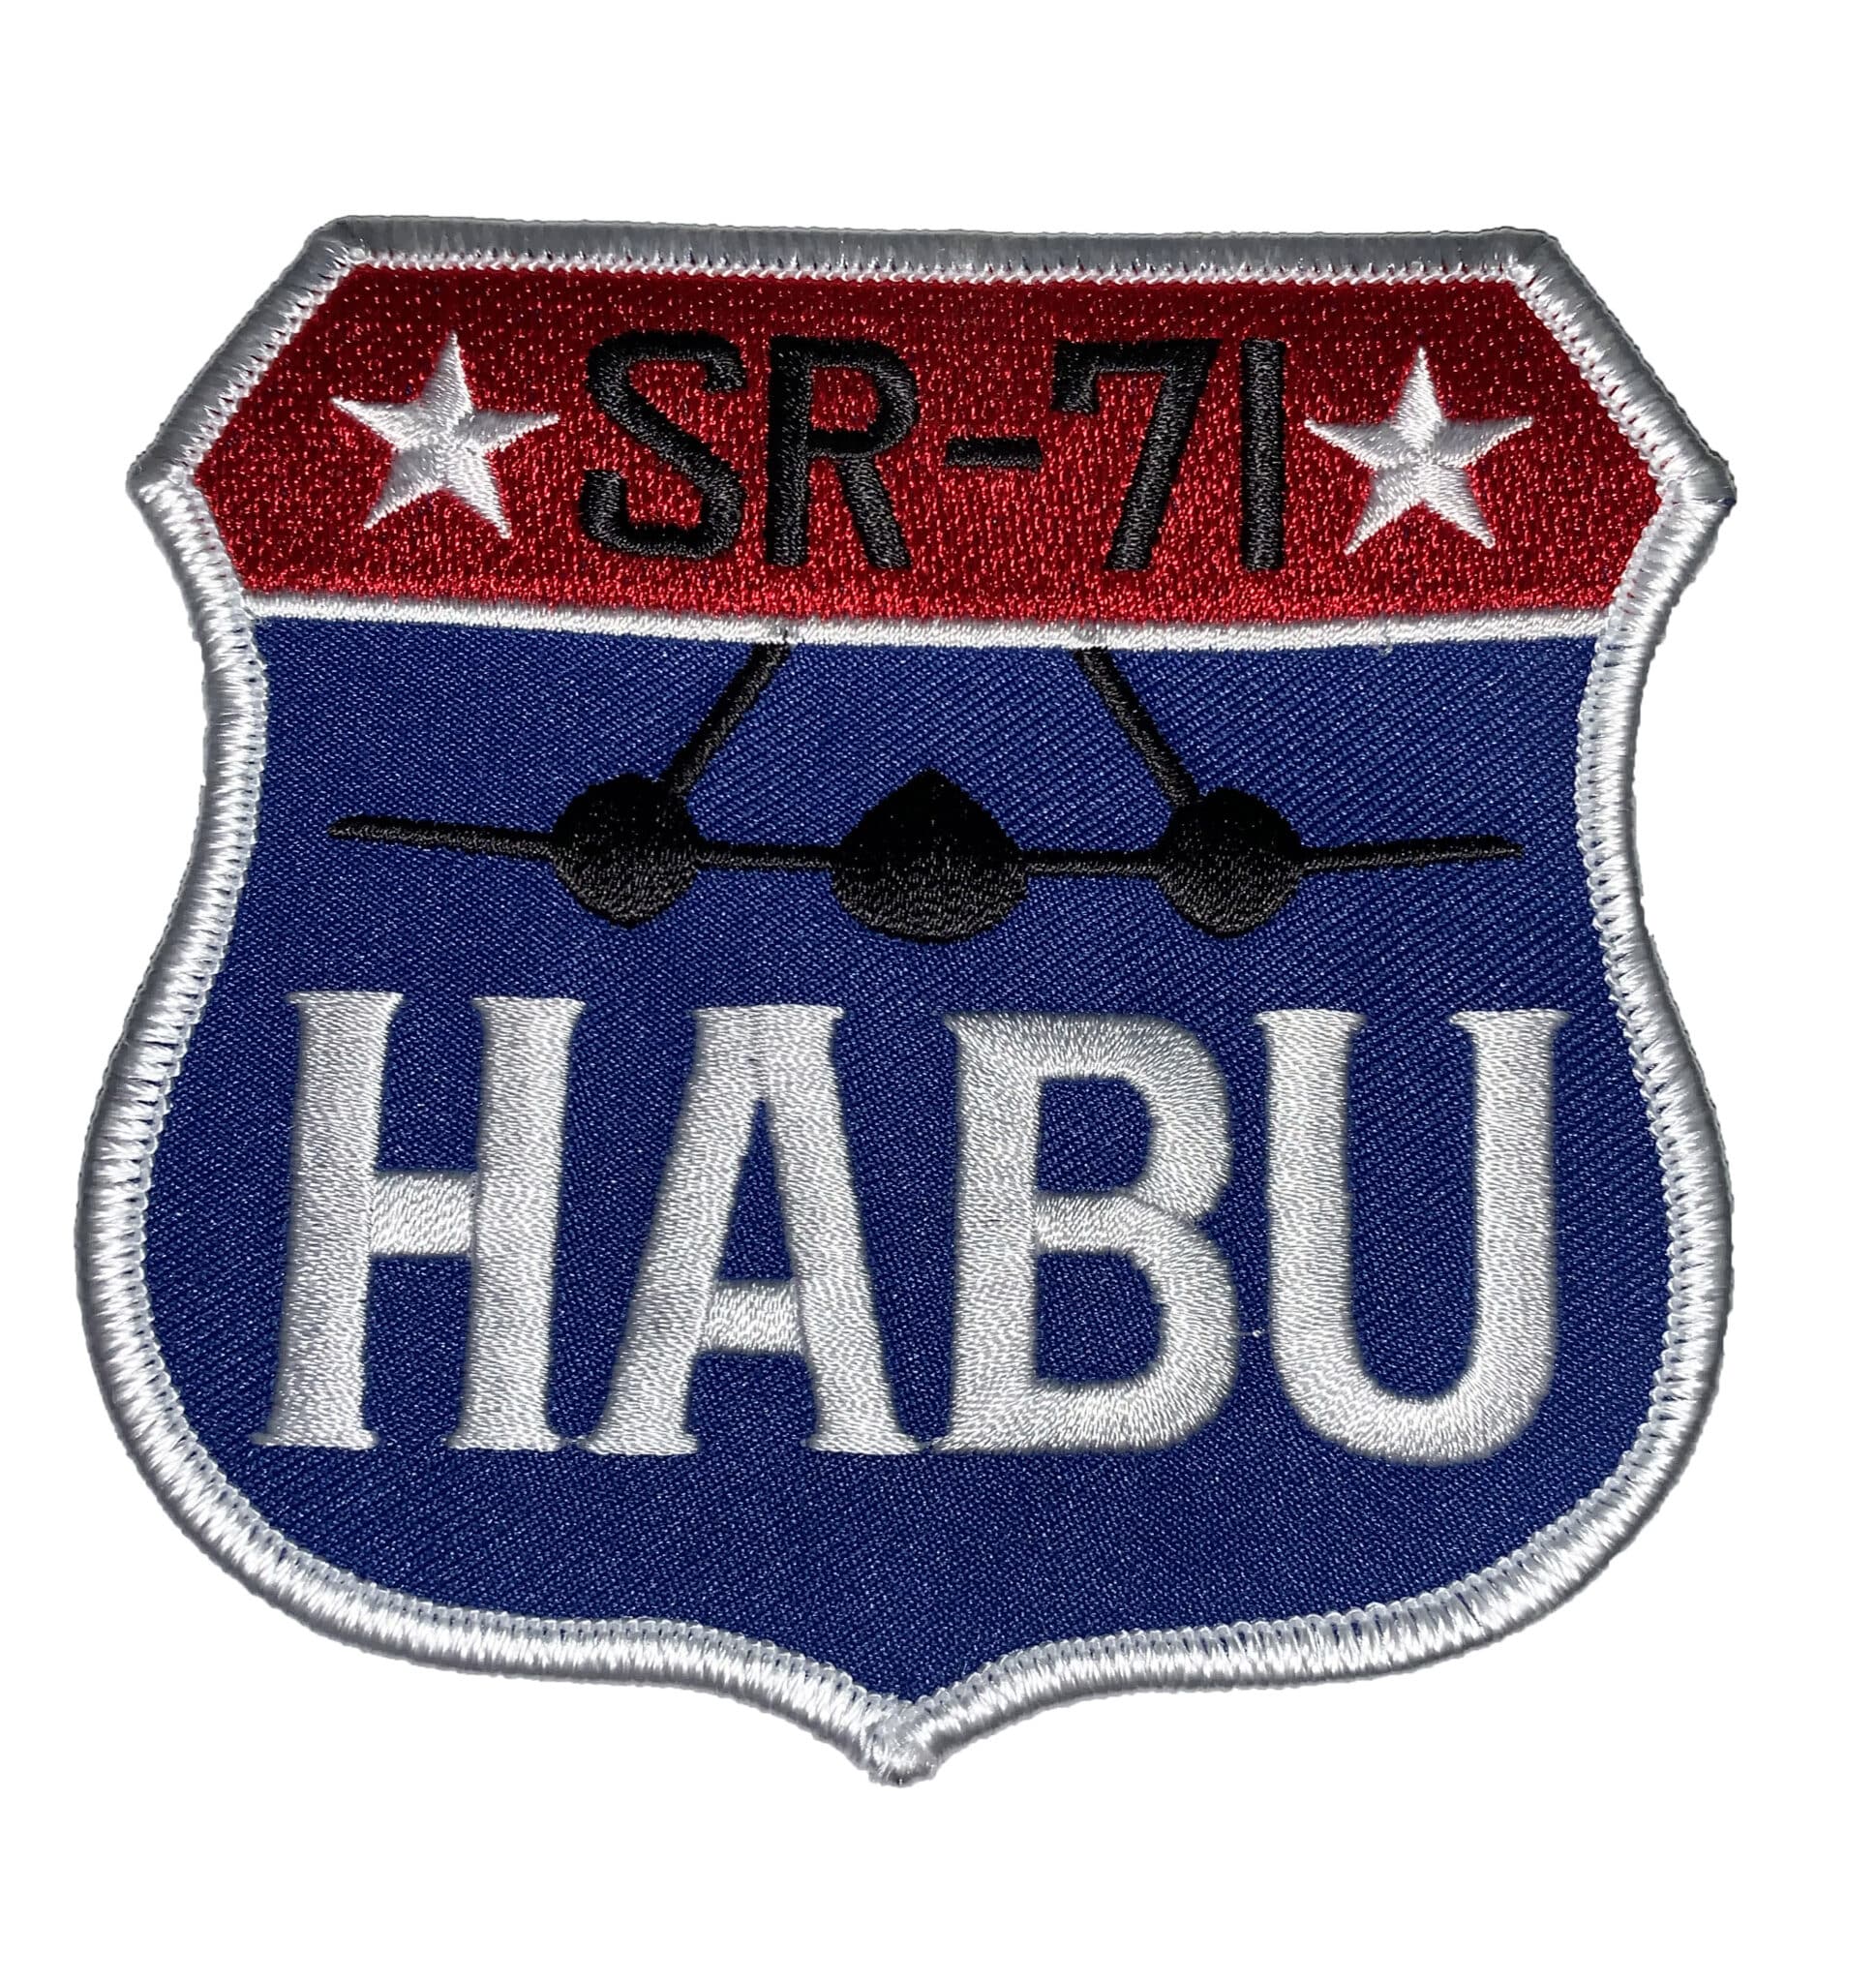 SR-71 HABU Patch – Sew On